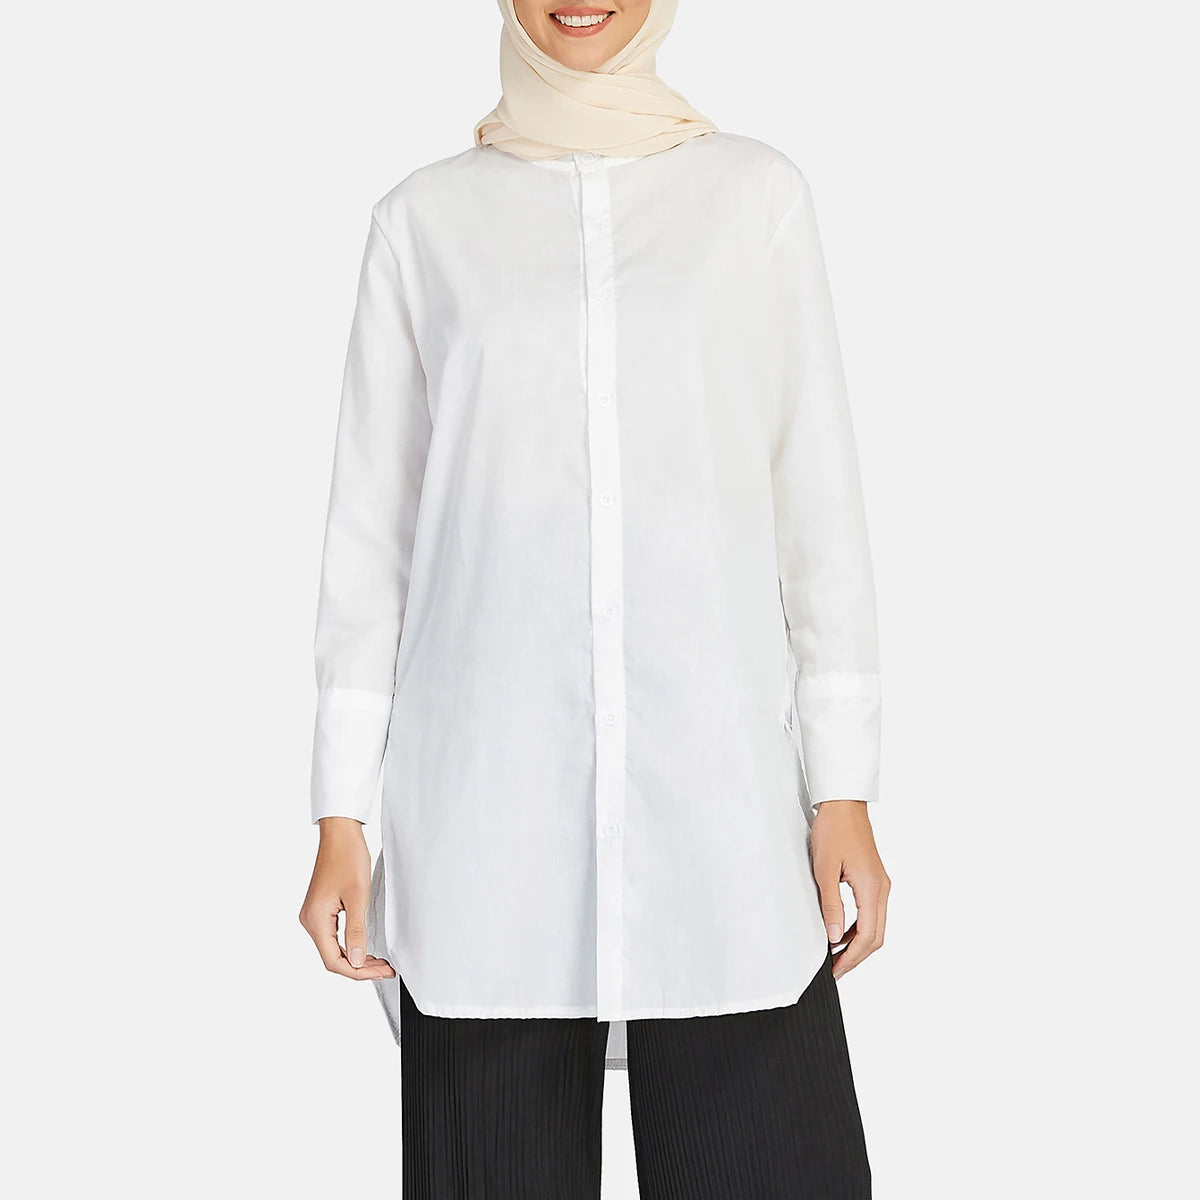 Women Fashion Tunic Blouse Long Sleeve Islamic Ramadan Shirts Lady Plus Size S-5xl White Tops for Muslim Girls Chemise Femme